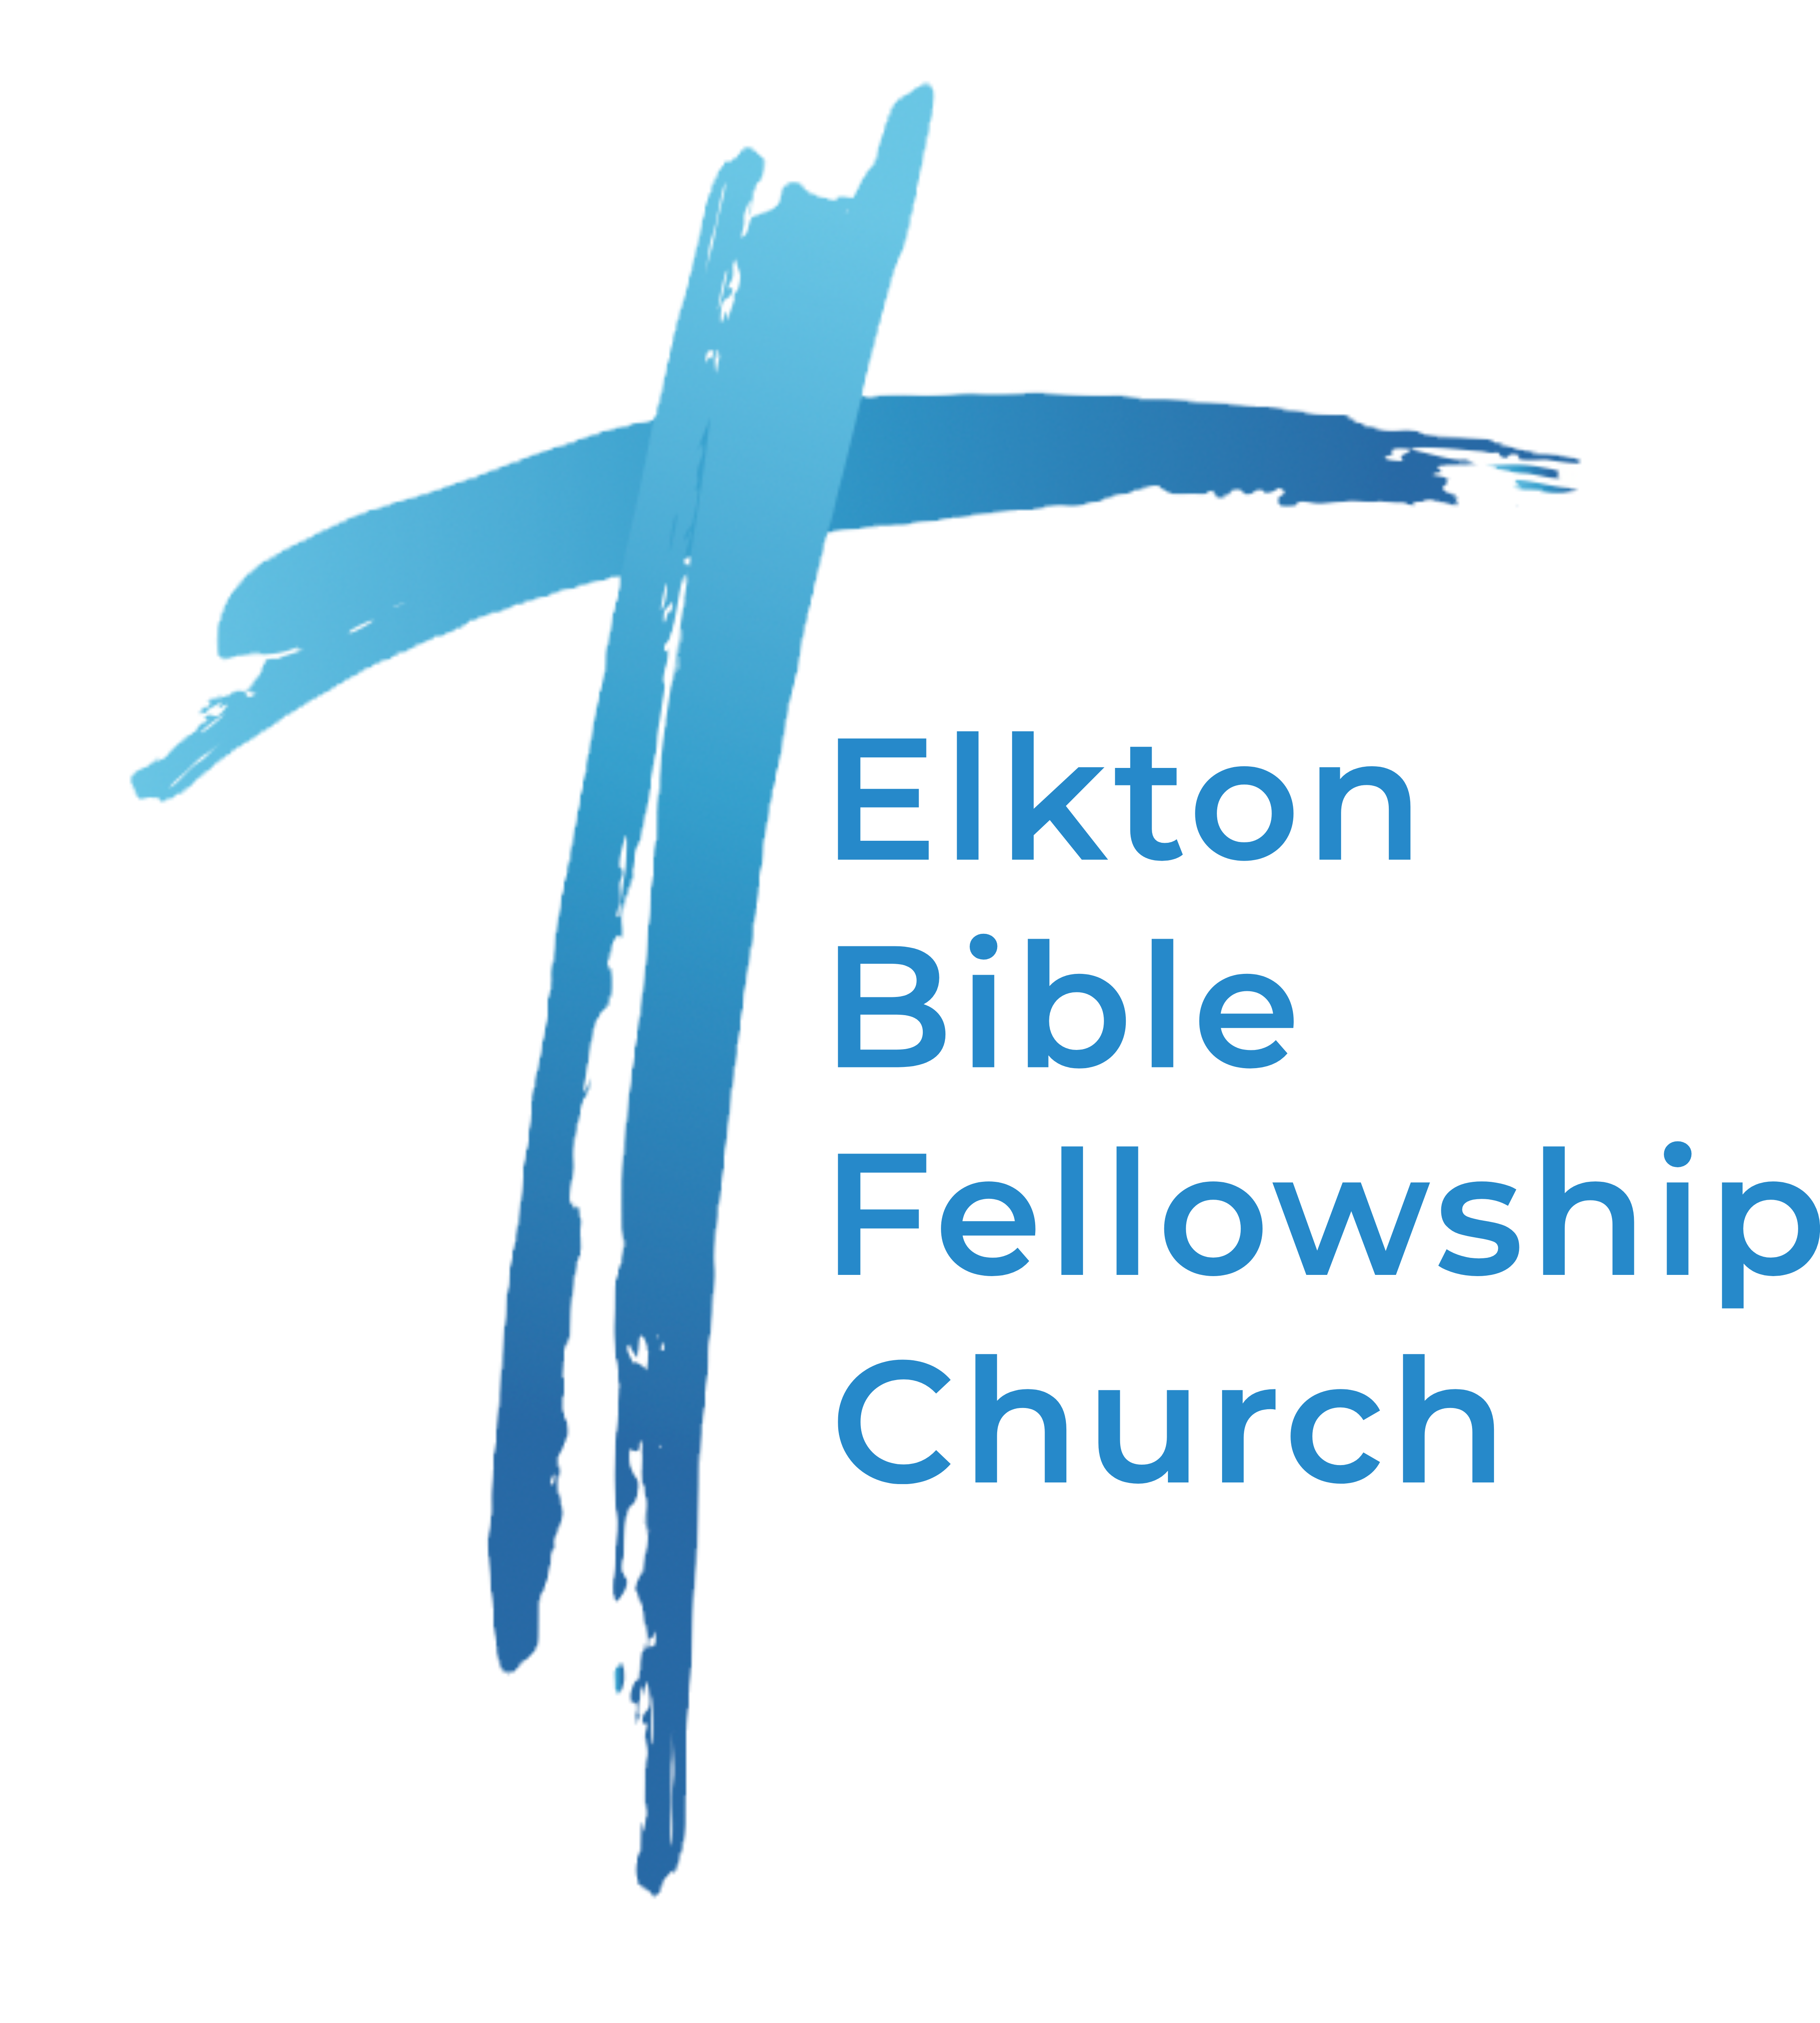 Elkton Bible Fellowship Church